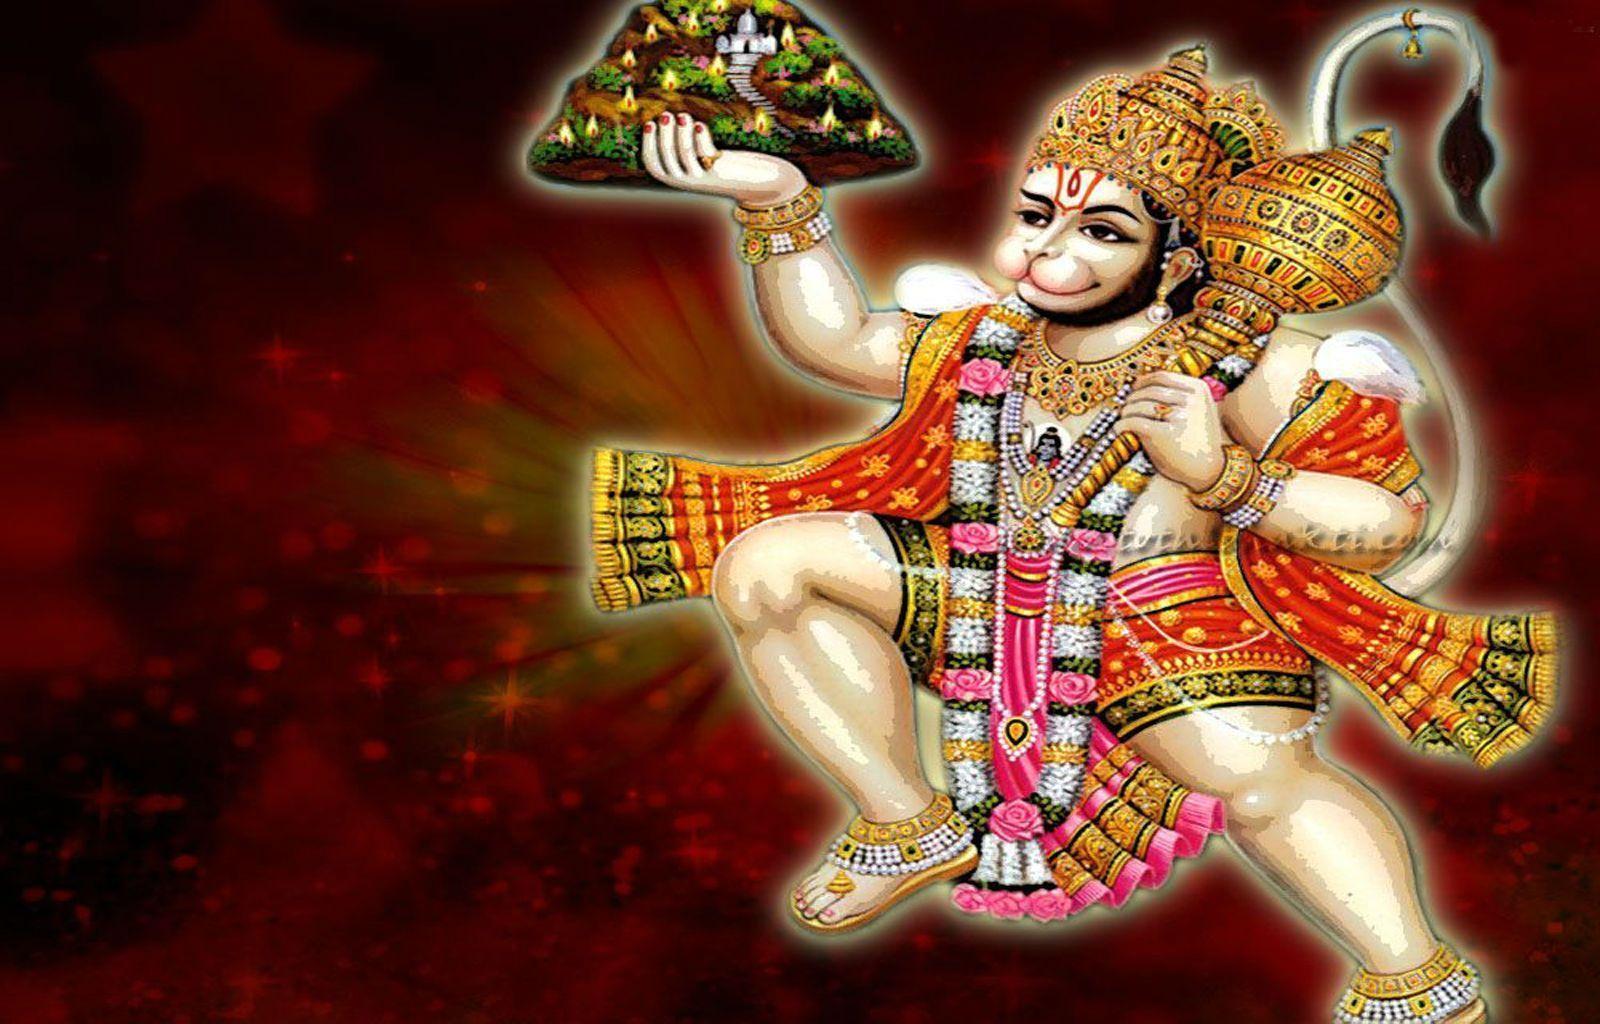 Hanuman wallpaper, photo, picture & Image for desktop background